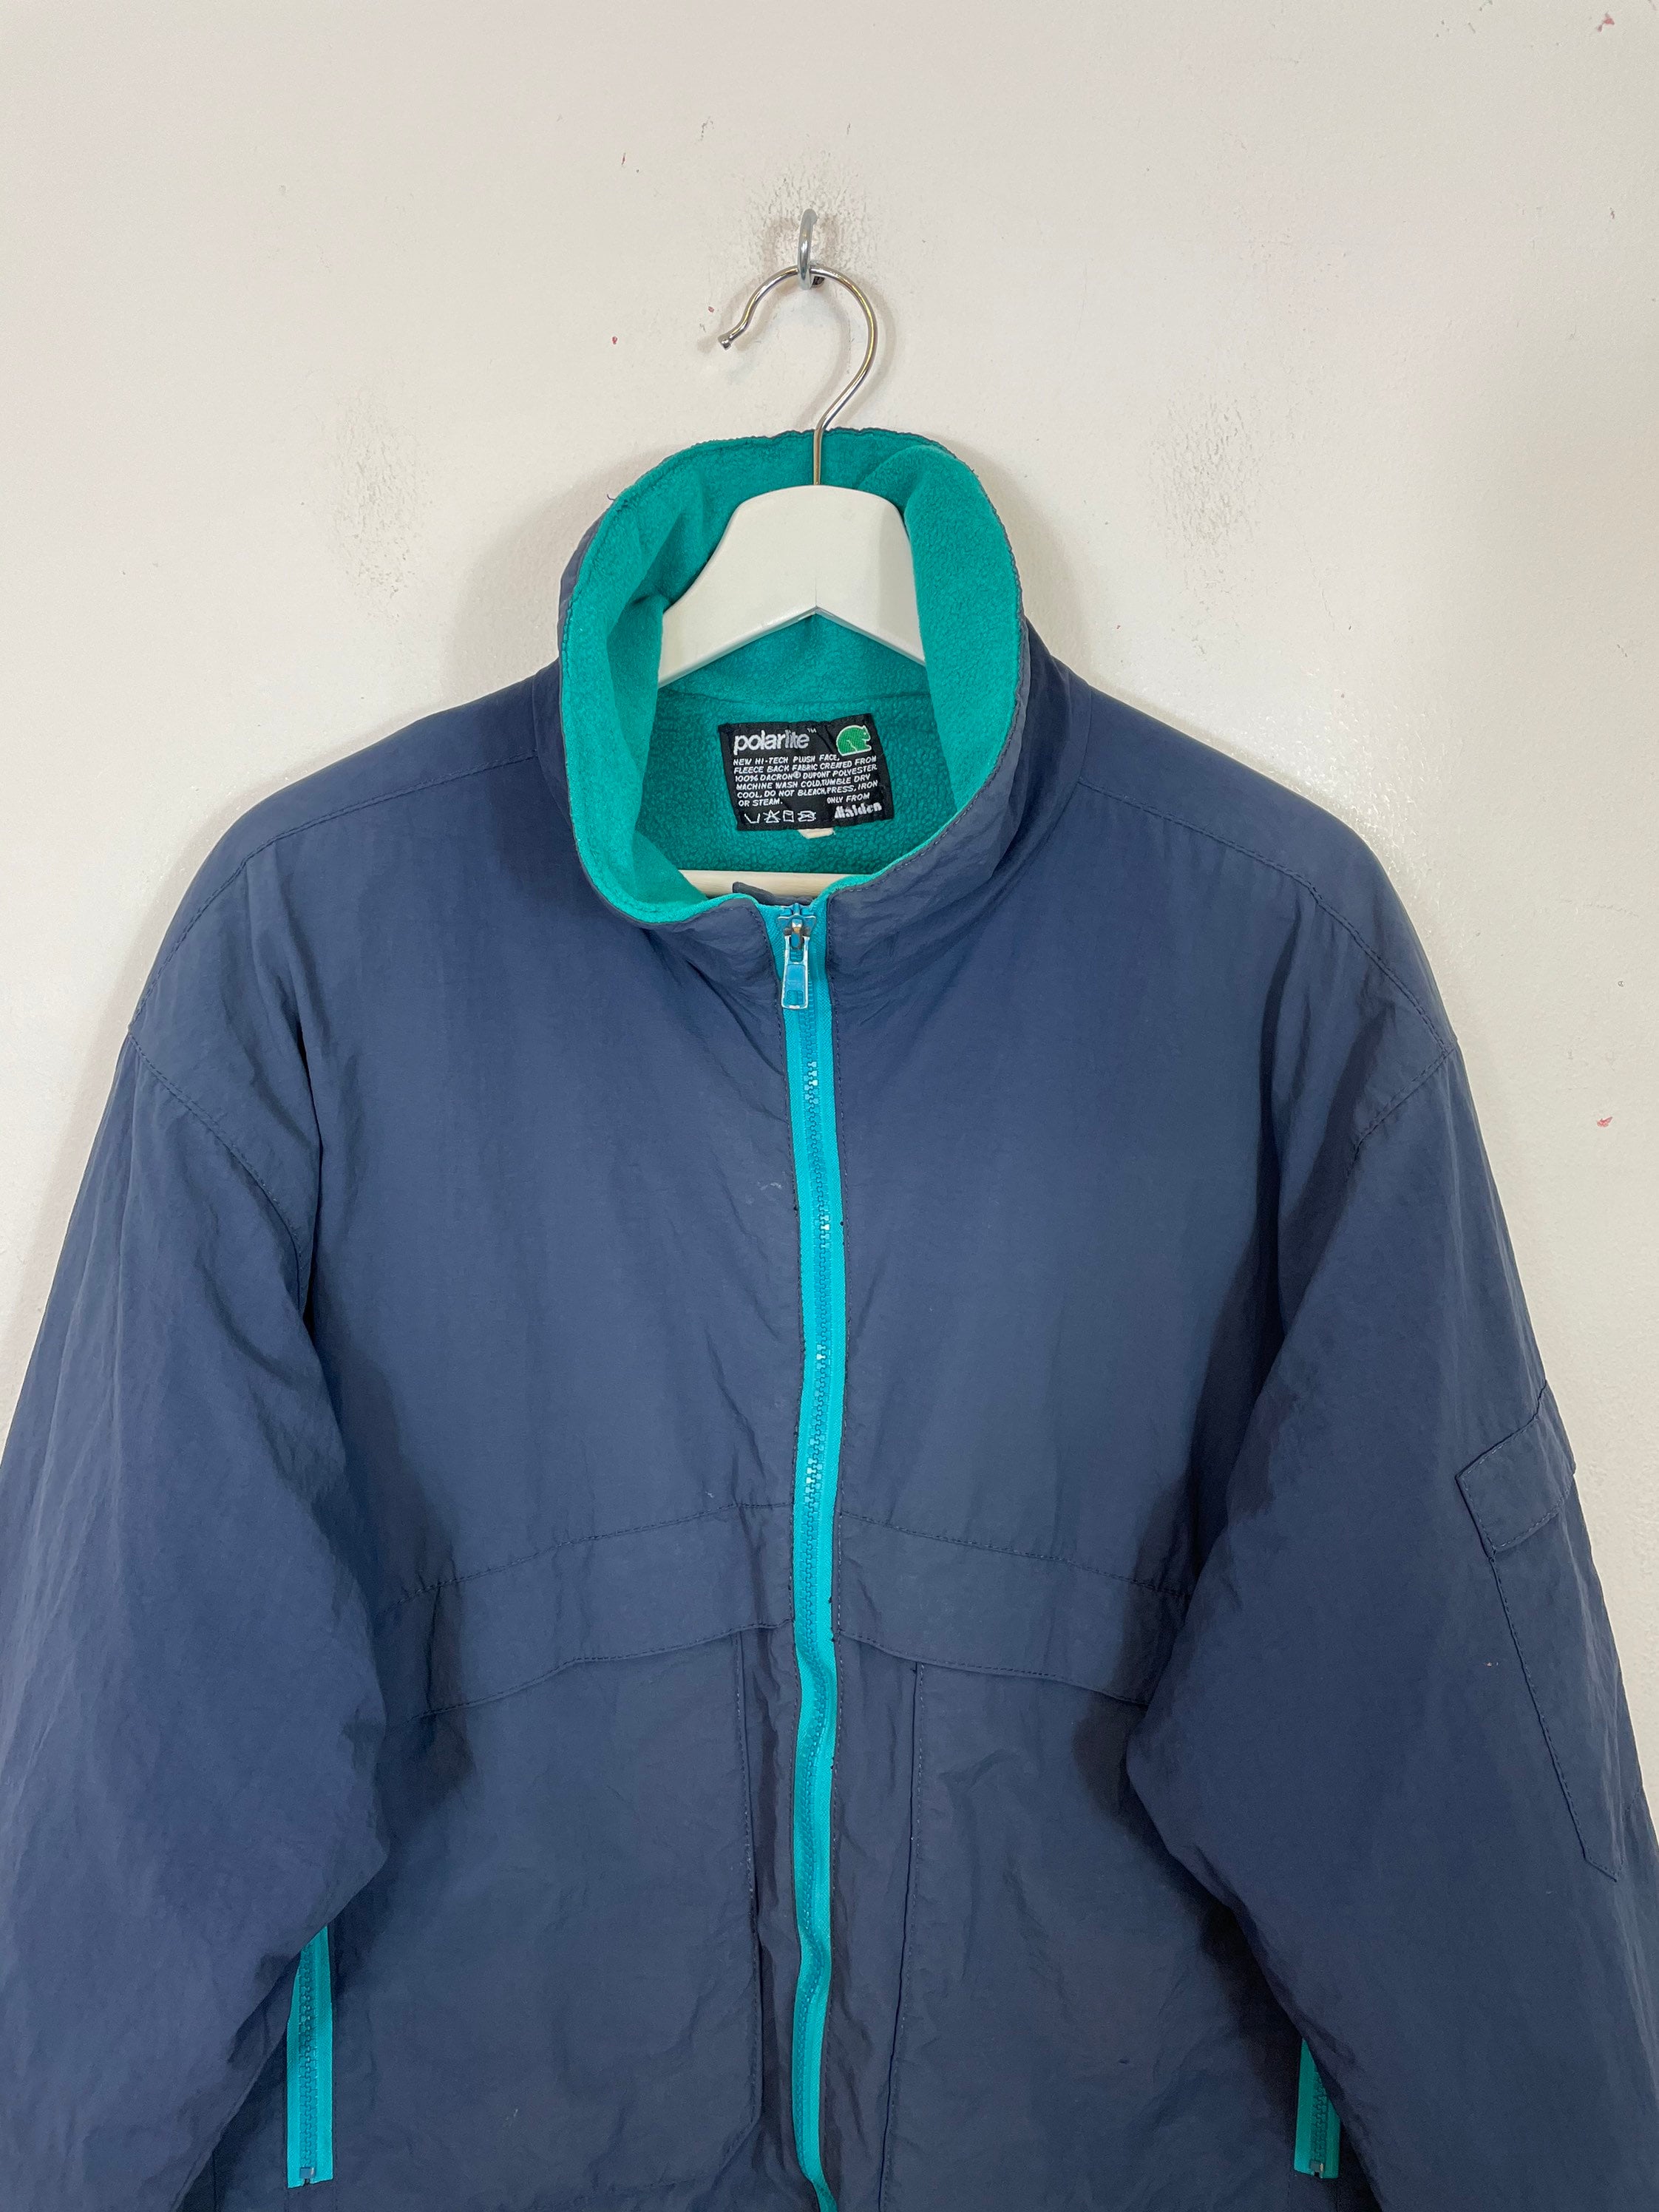 Men's Vintage MUSTO Snugs Polarlite Fleece Lined Jacket | Etsy